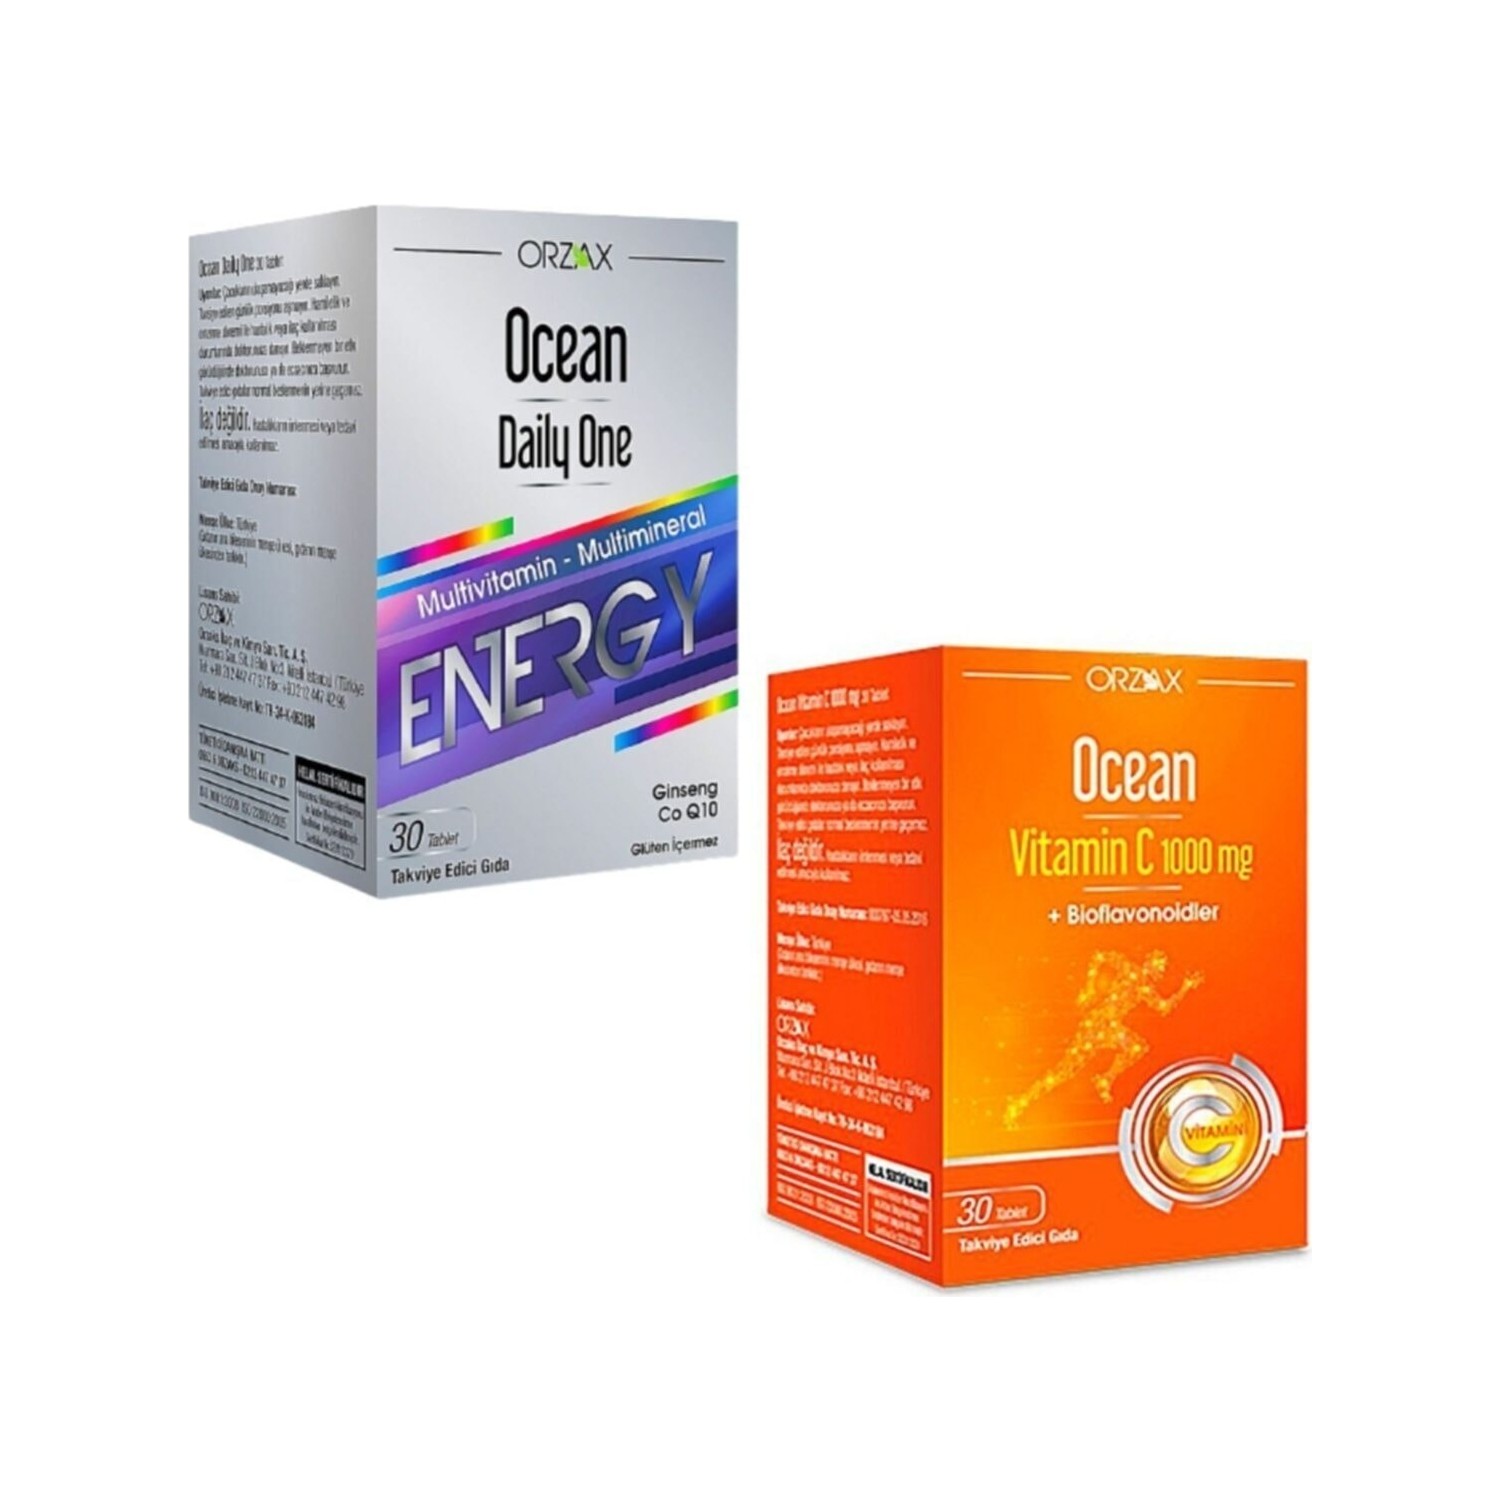 Мультивитамины Ocean Daily One Energy And Ocean Vitamin C Set